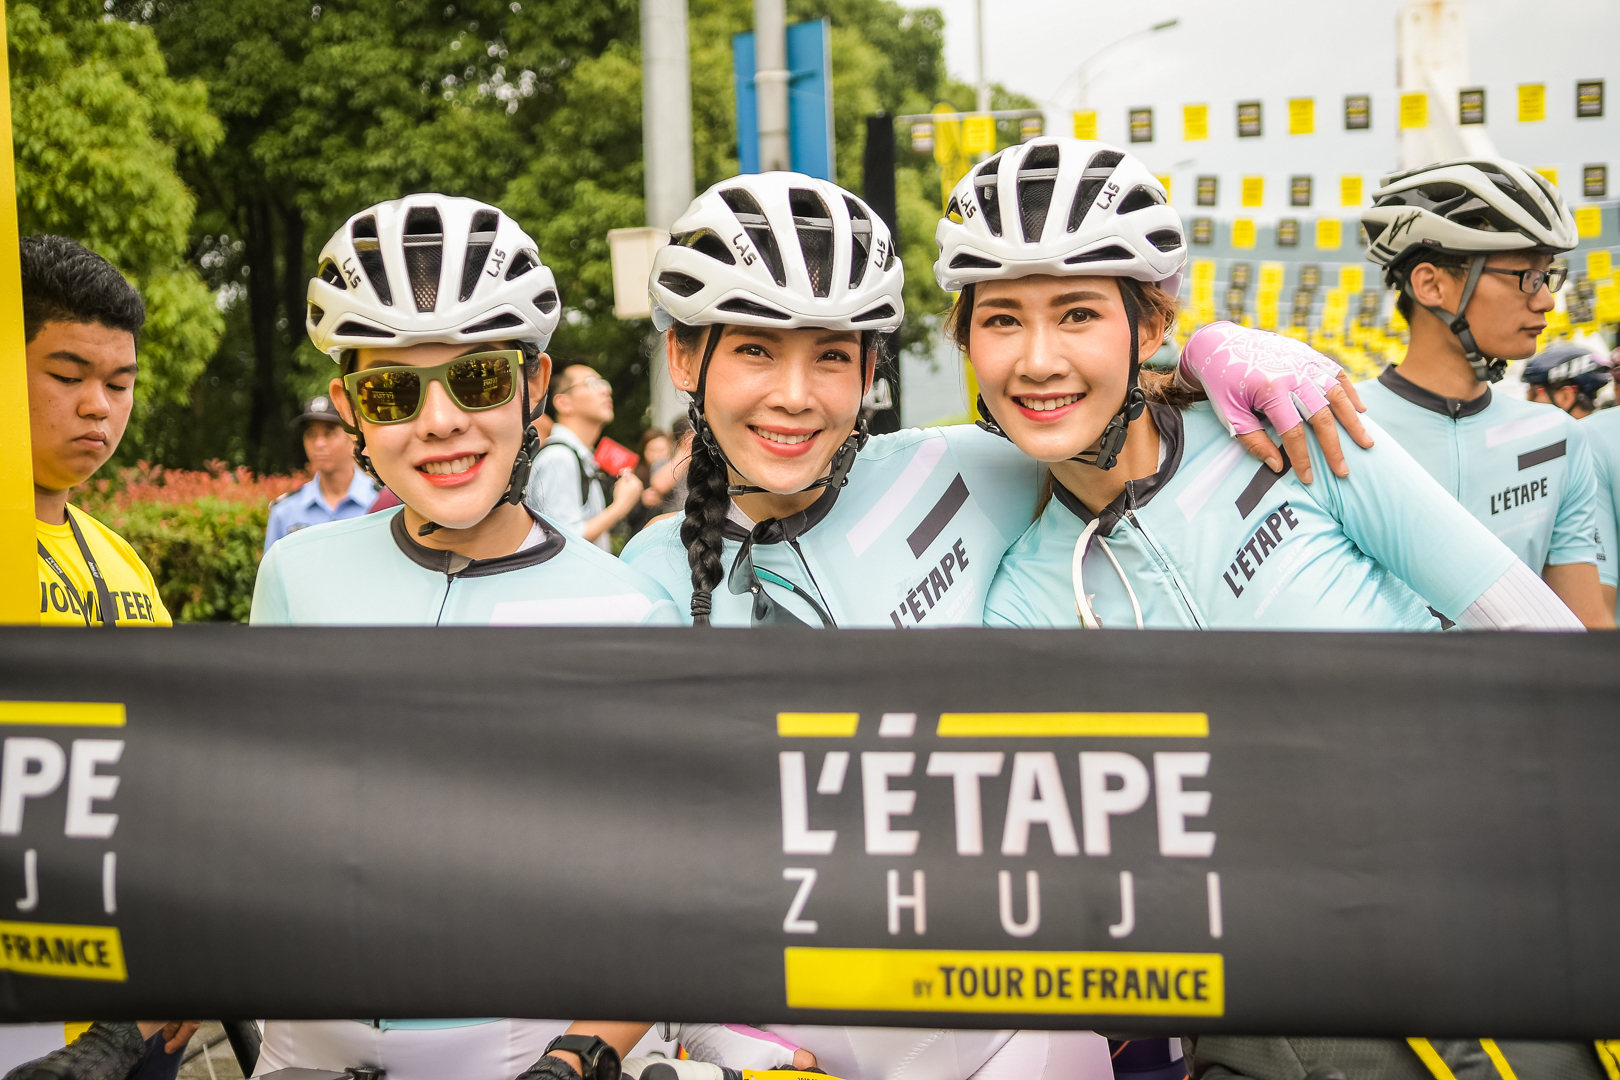 L’Étape Zhuji by Tour de France 2019 (China)